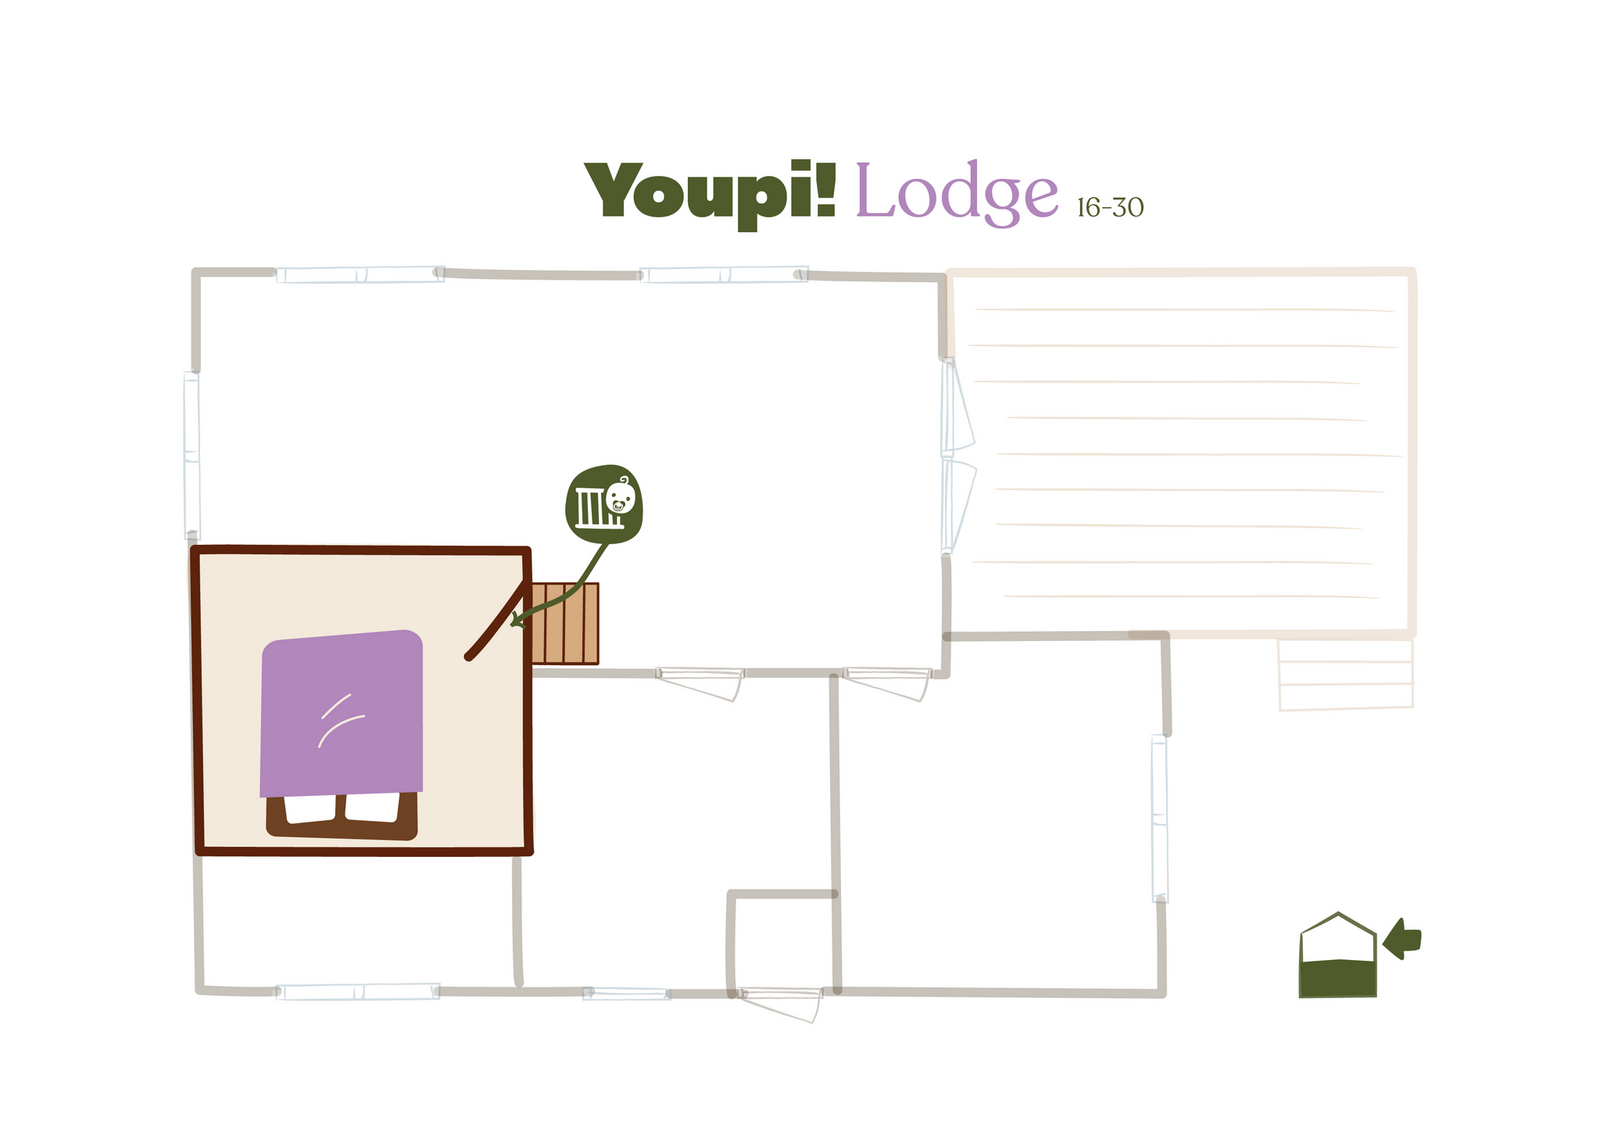 Youpi! Lodge